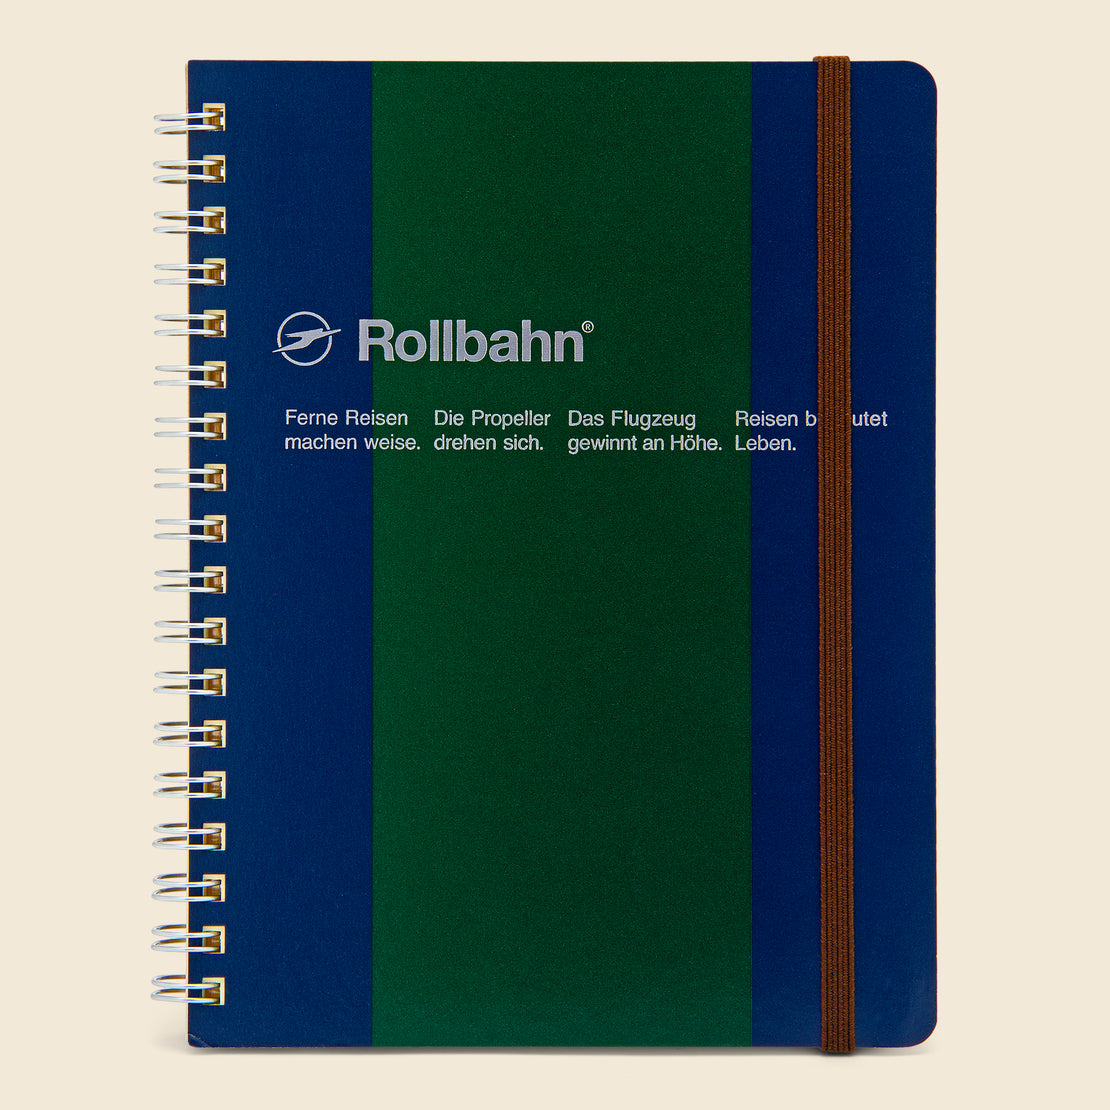 Paper Goods Rollbahn Spiral Notebook - Dark Blue/Green